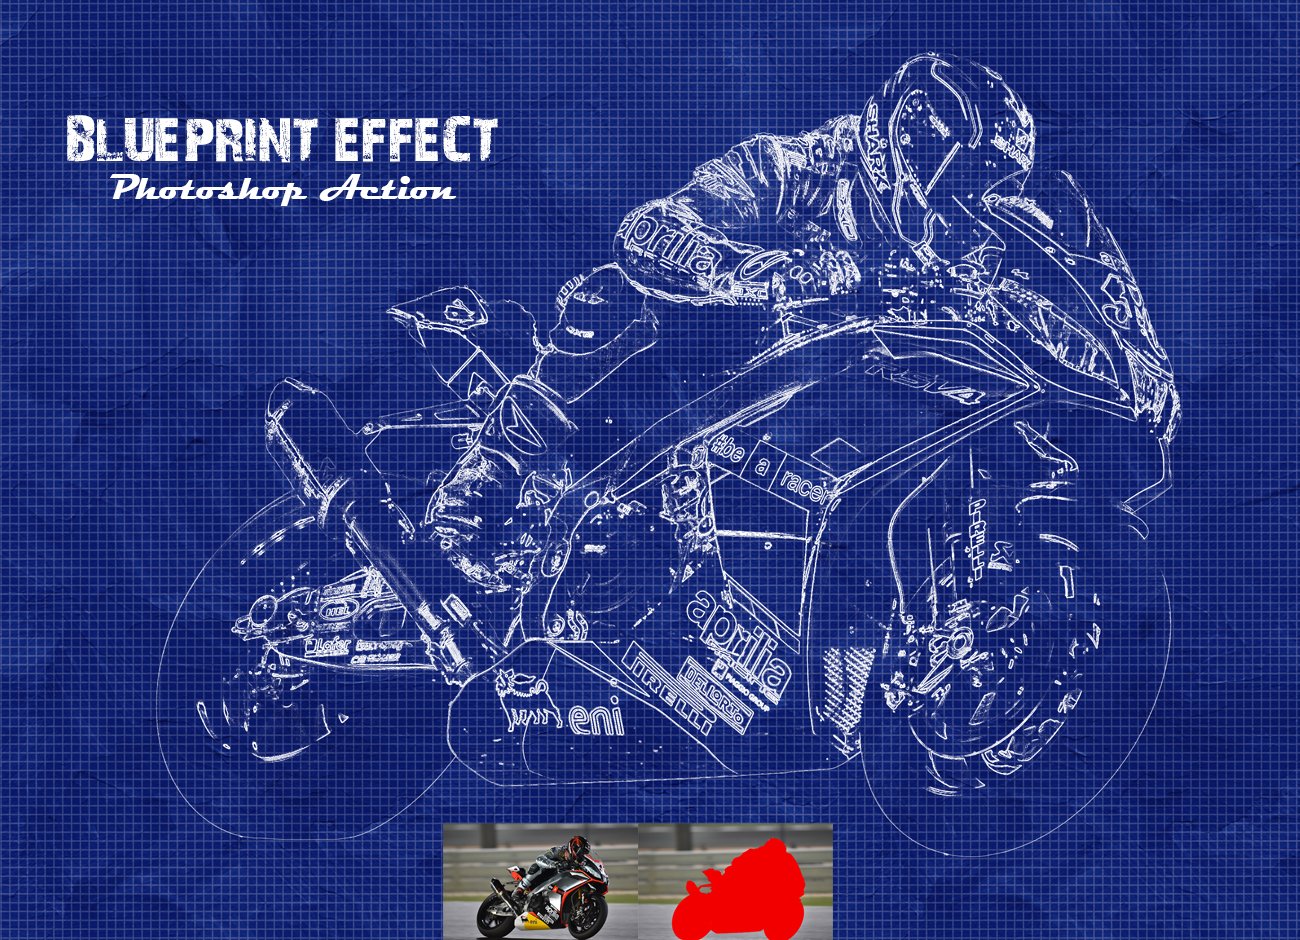 Blueprint Effect Photoshop Actioncover image.